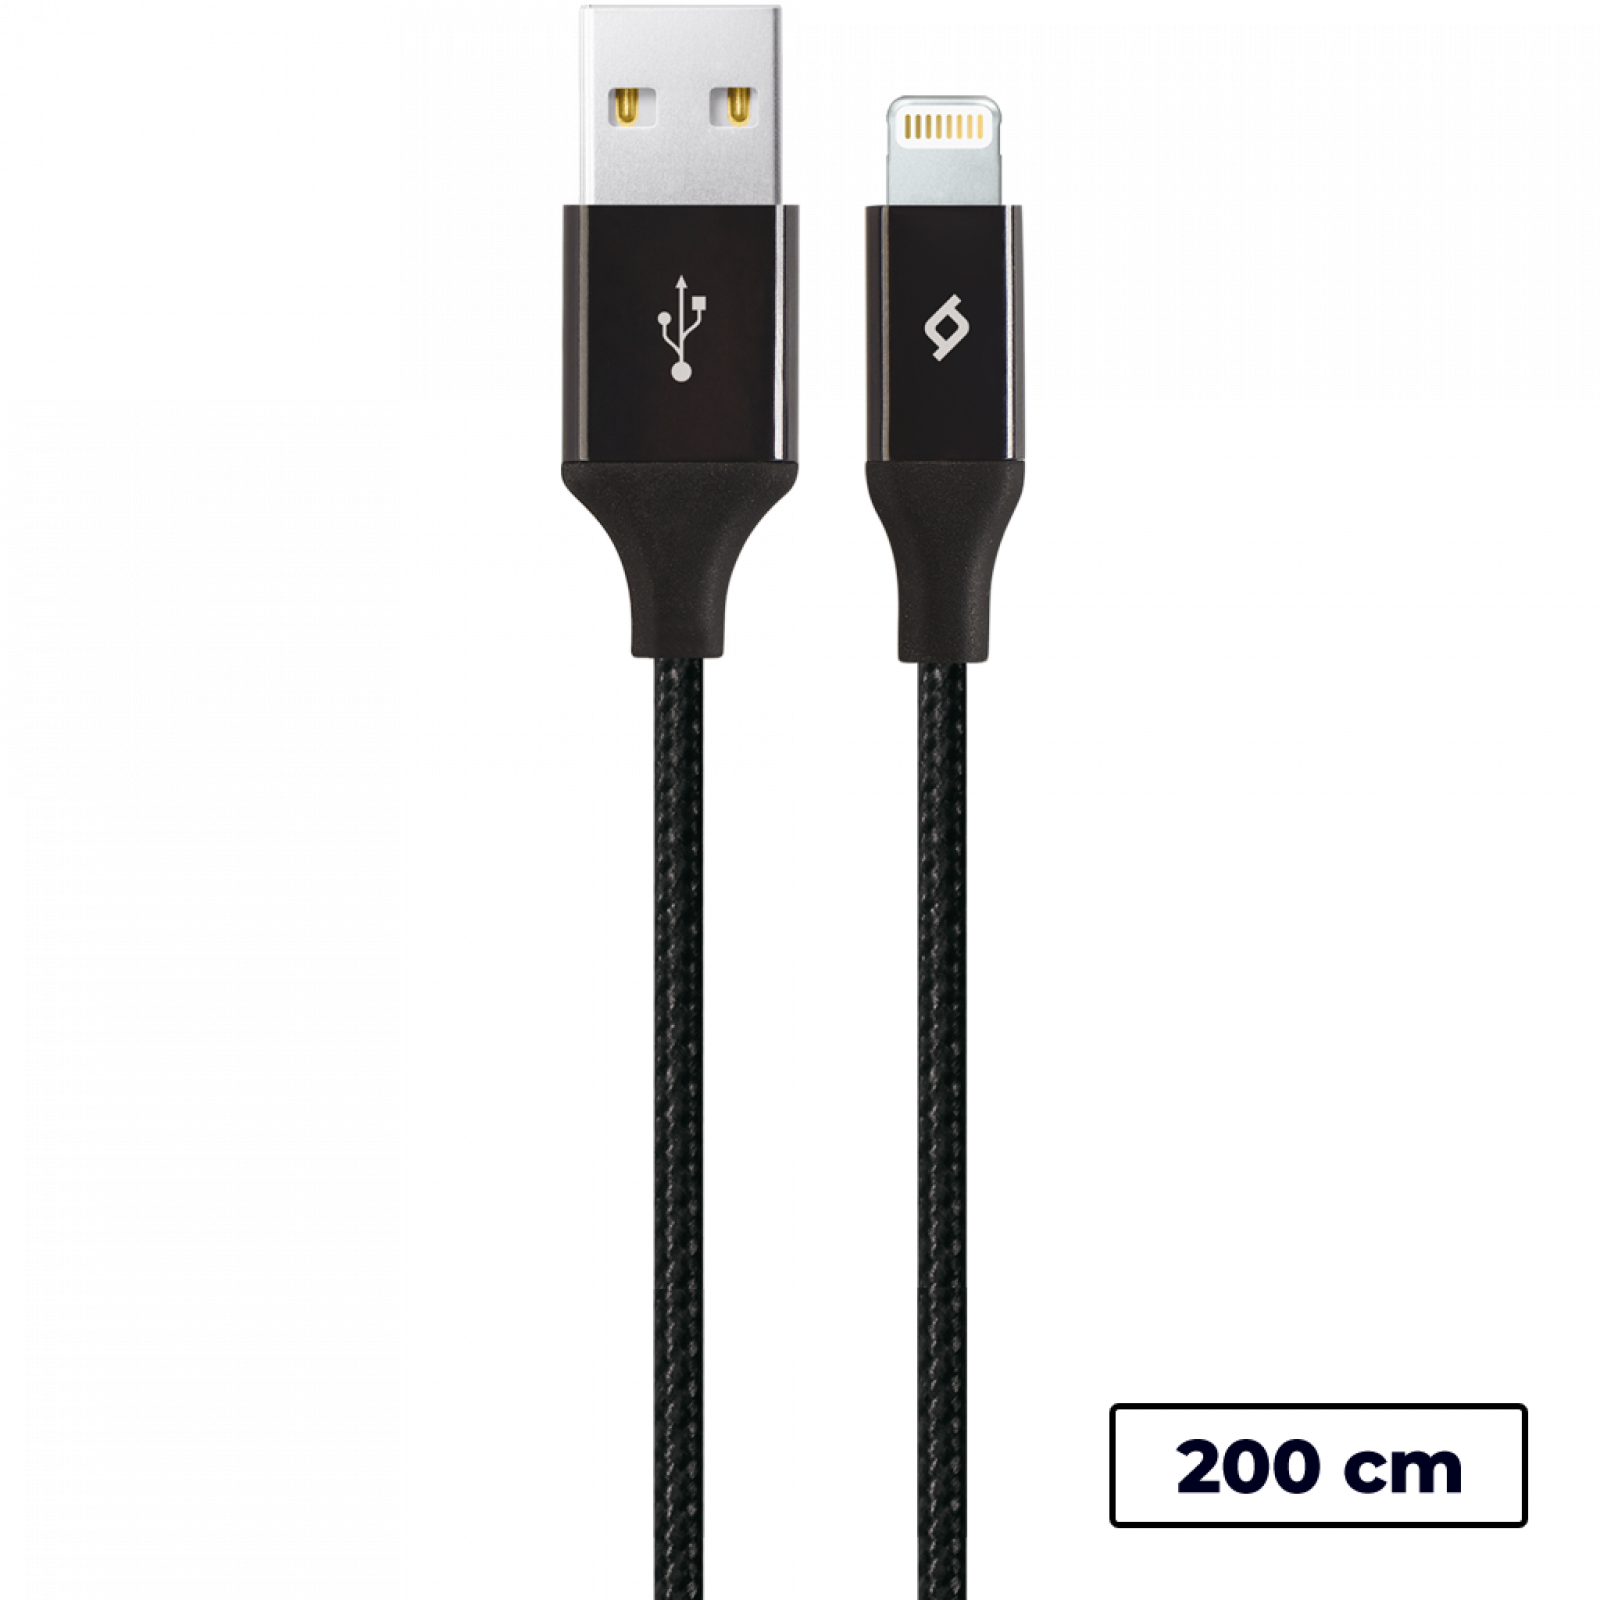 Кабел ttec AlumiCable Lightning USB Charge / Data XL Cable , 2m - Черен